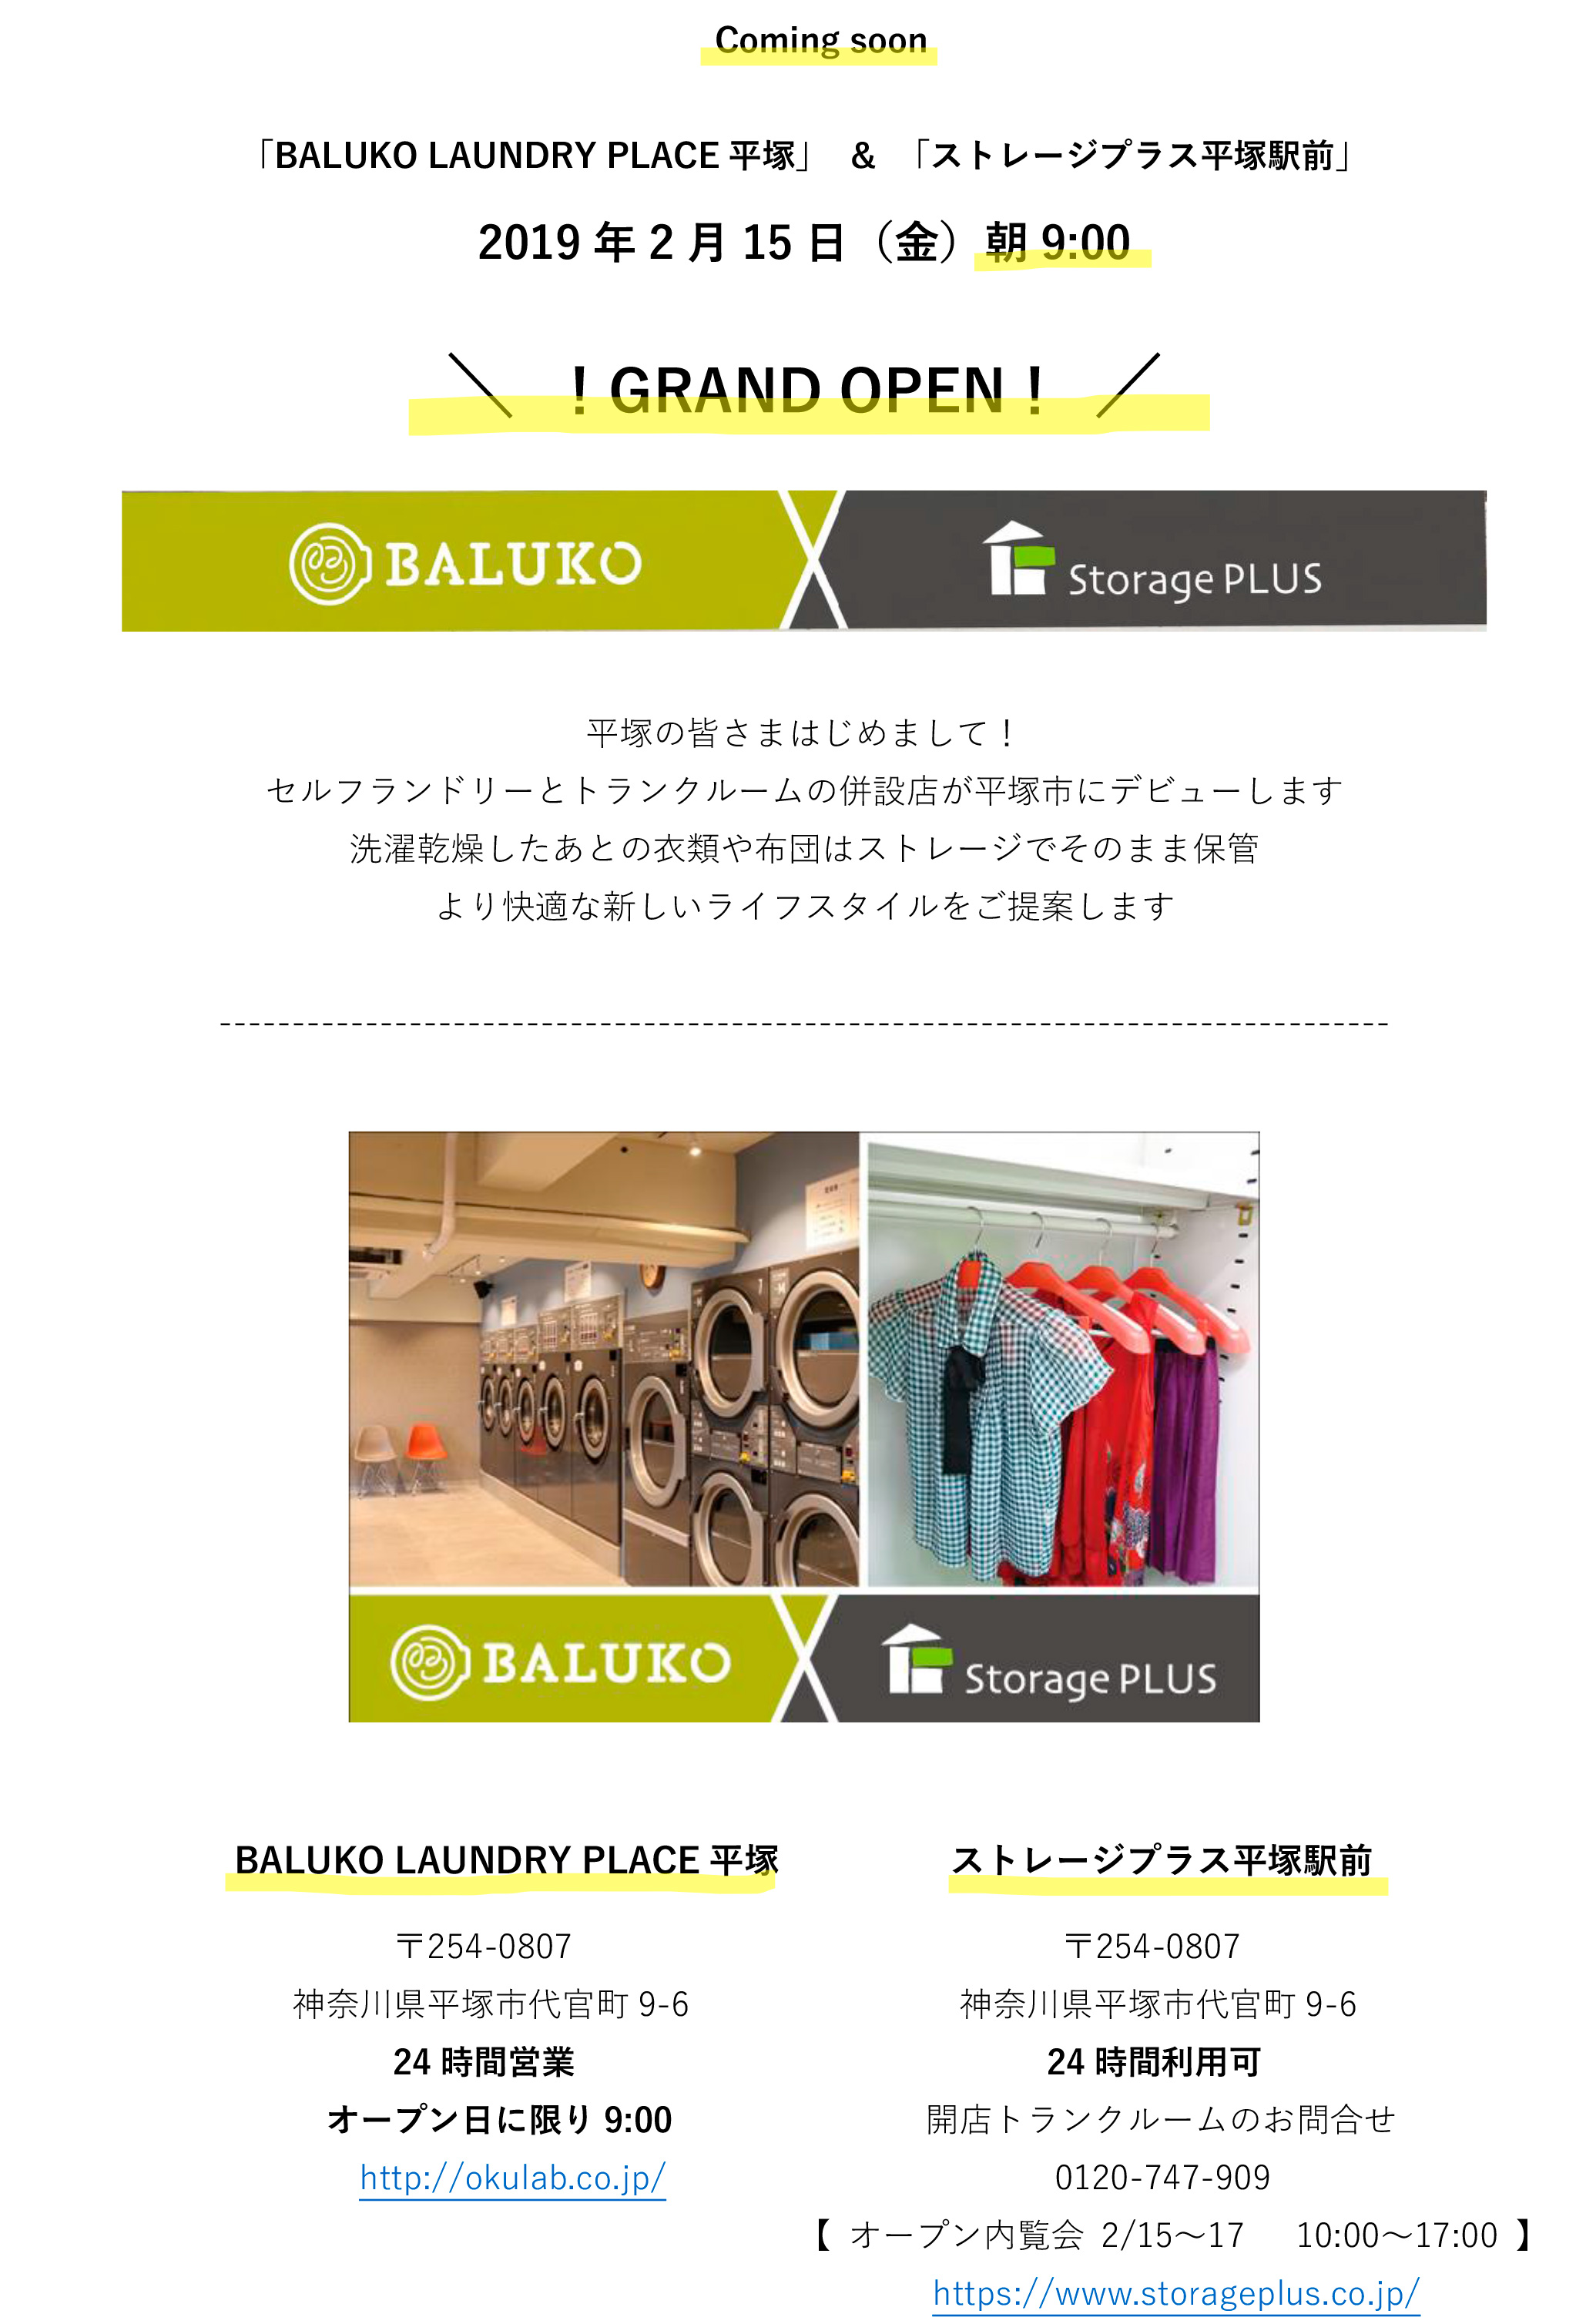 GRAND OPEN! 【BALUKO LAUNDRY PLACE 平塚】&【ストレージプラス平塚駅前】